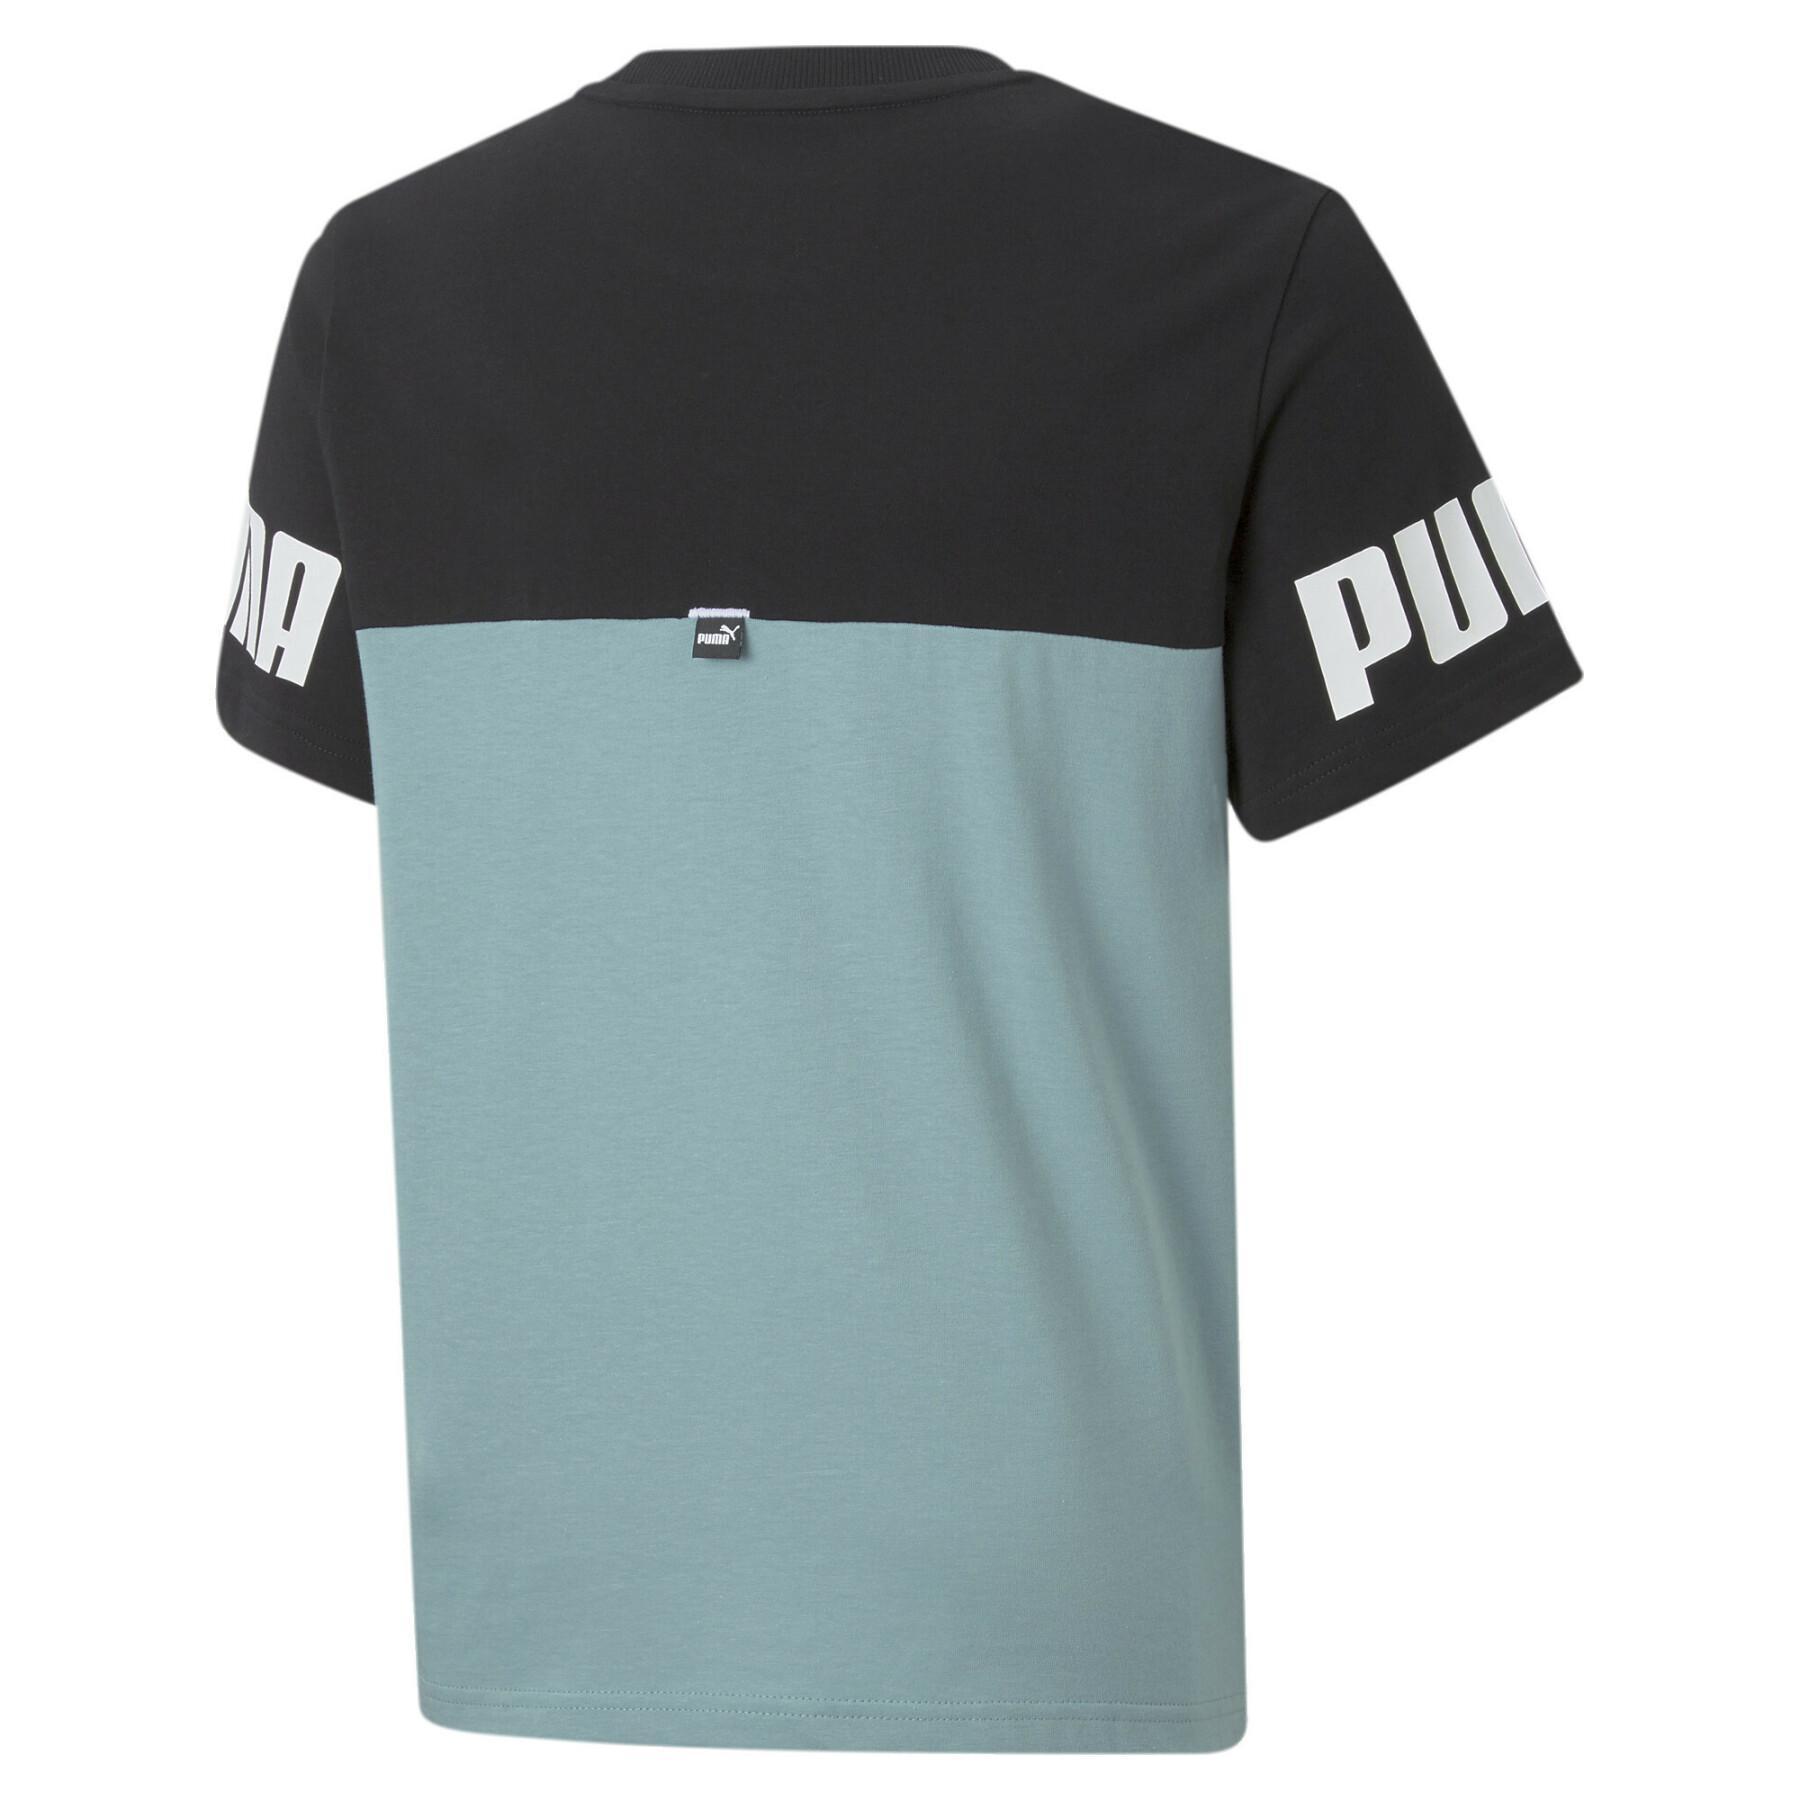 Kinder-T-shirt Puma Power